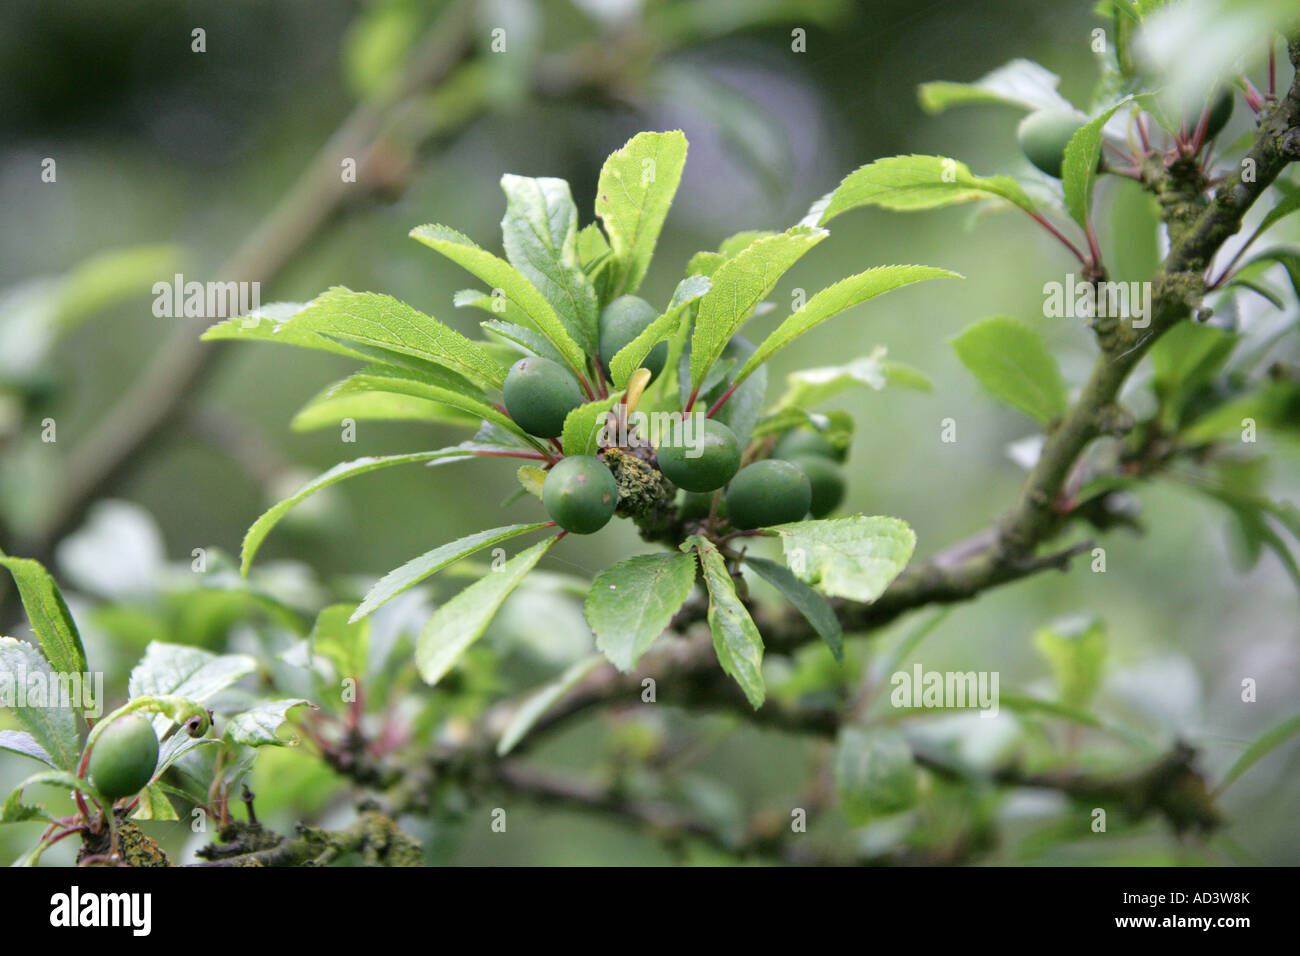 Sloe Unripe Fruit of the Blackthorn Tree Prunus spinosa Stock Photo